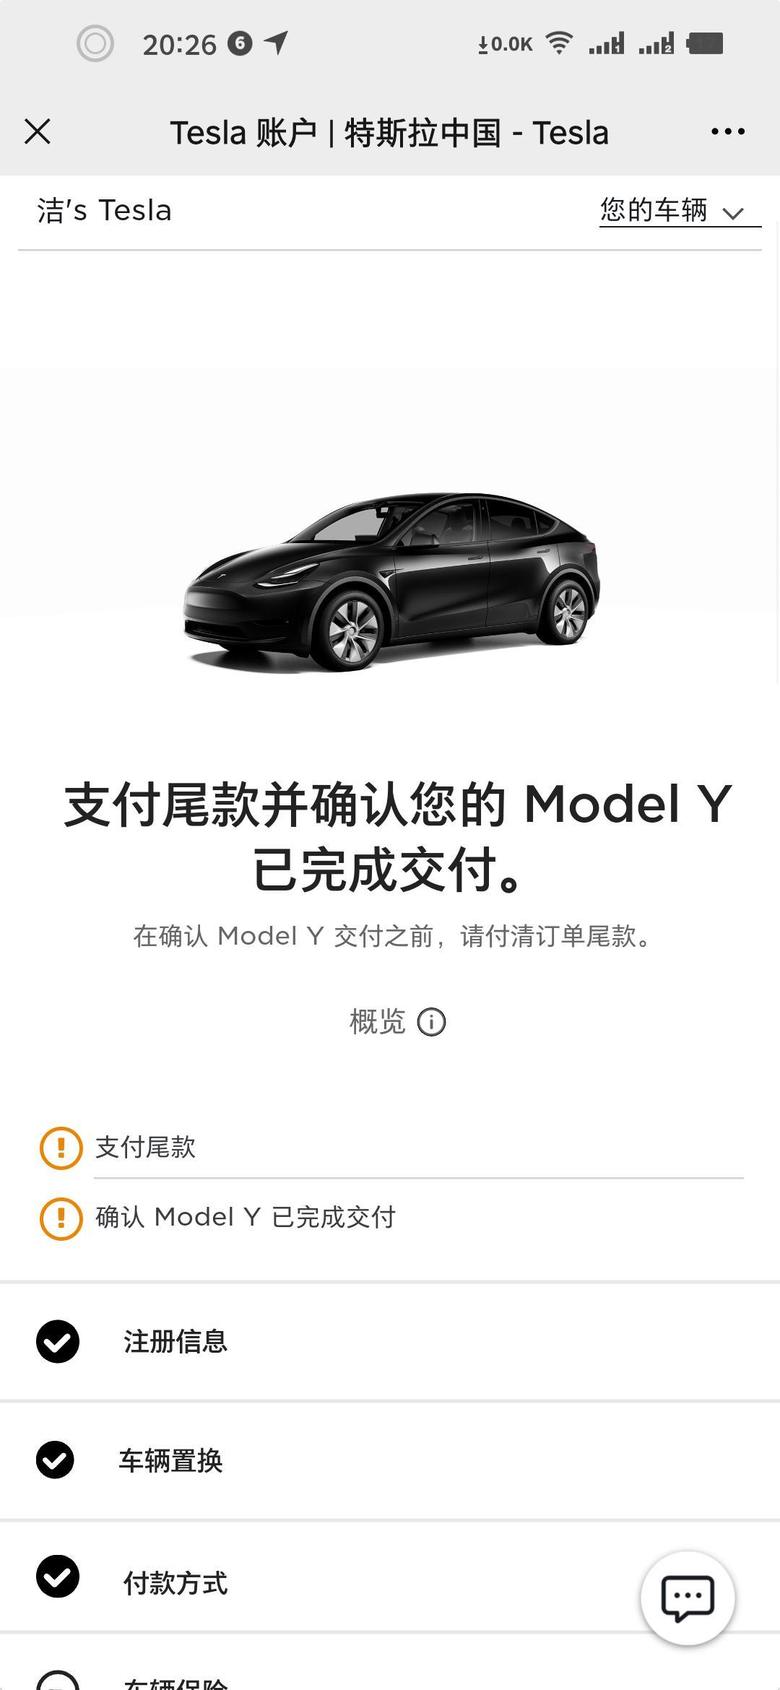 model y 上海7/10中午11点下的单单号8017687xx今天下午16:00通知付款了给兄弟们做个参考上海群的加一个